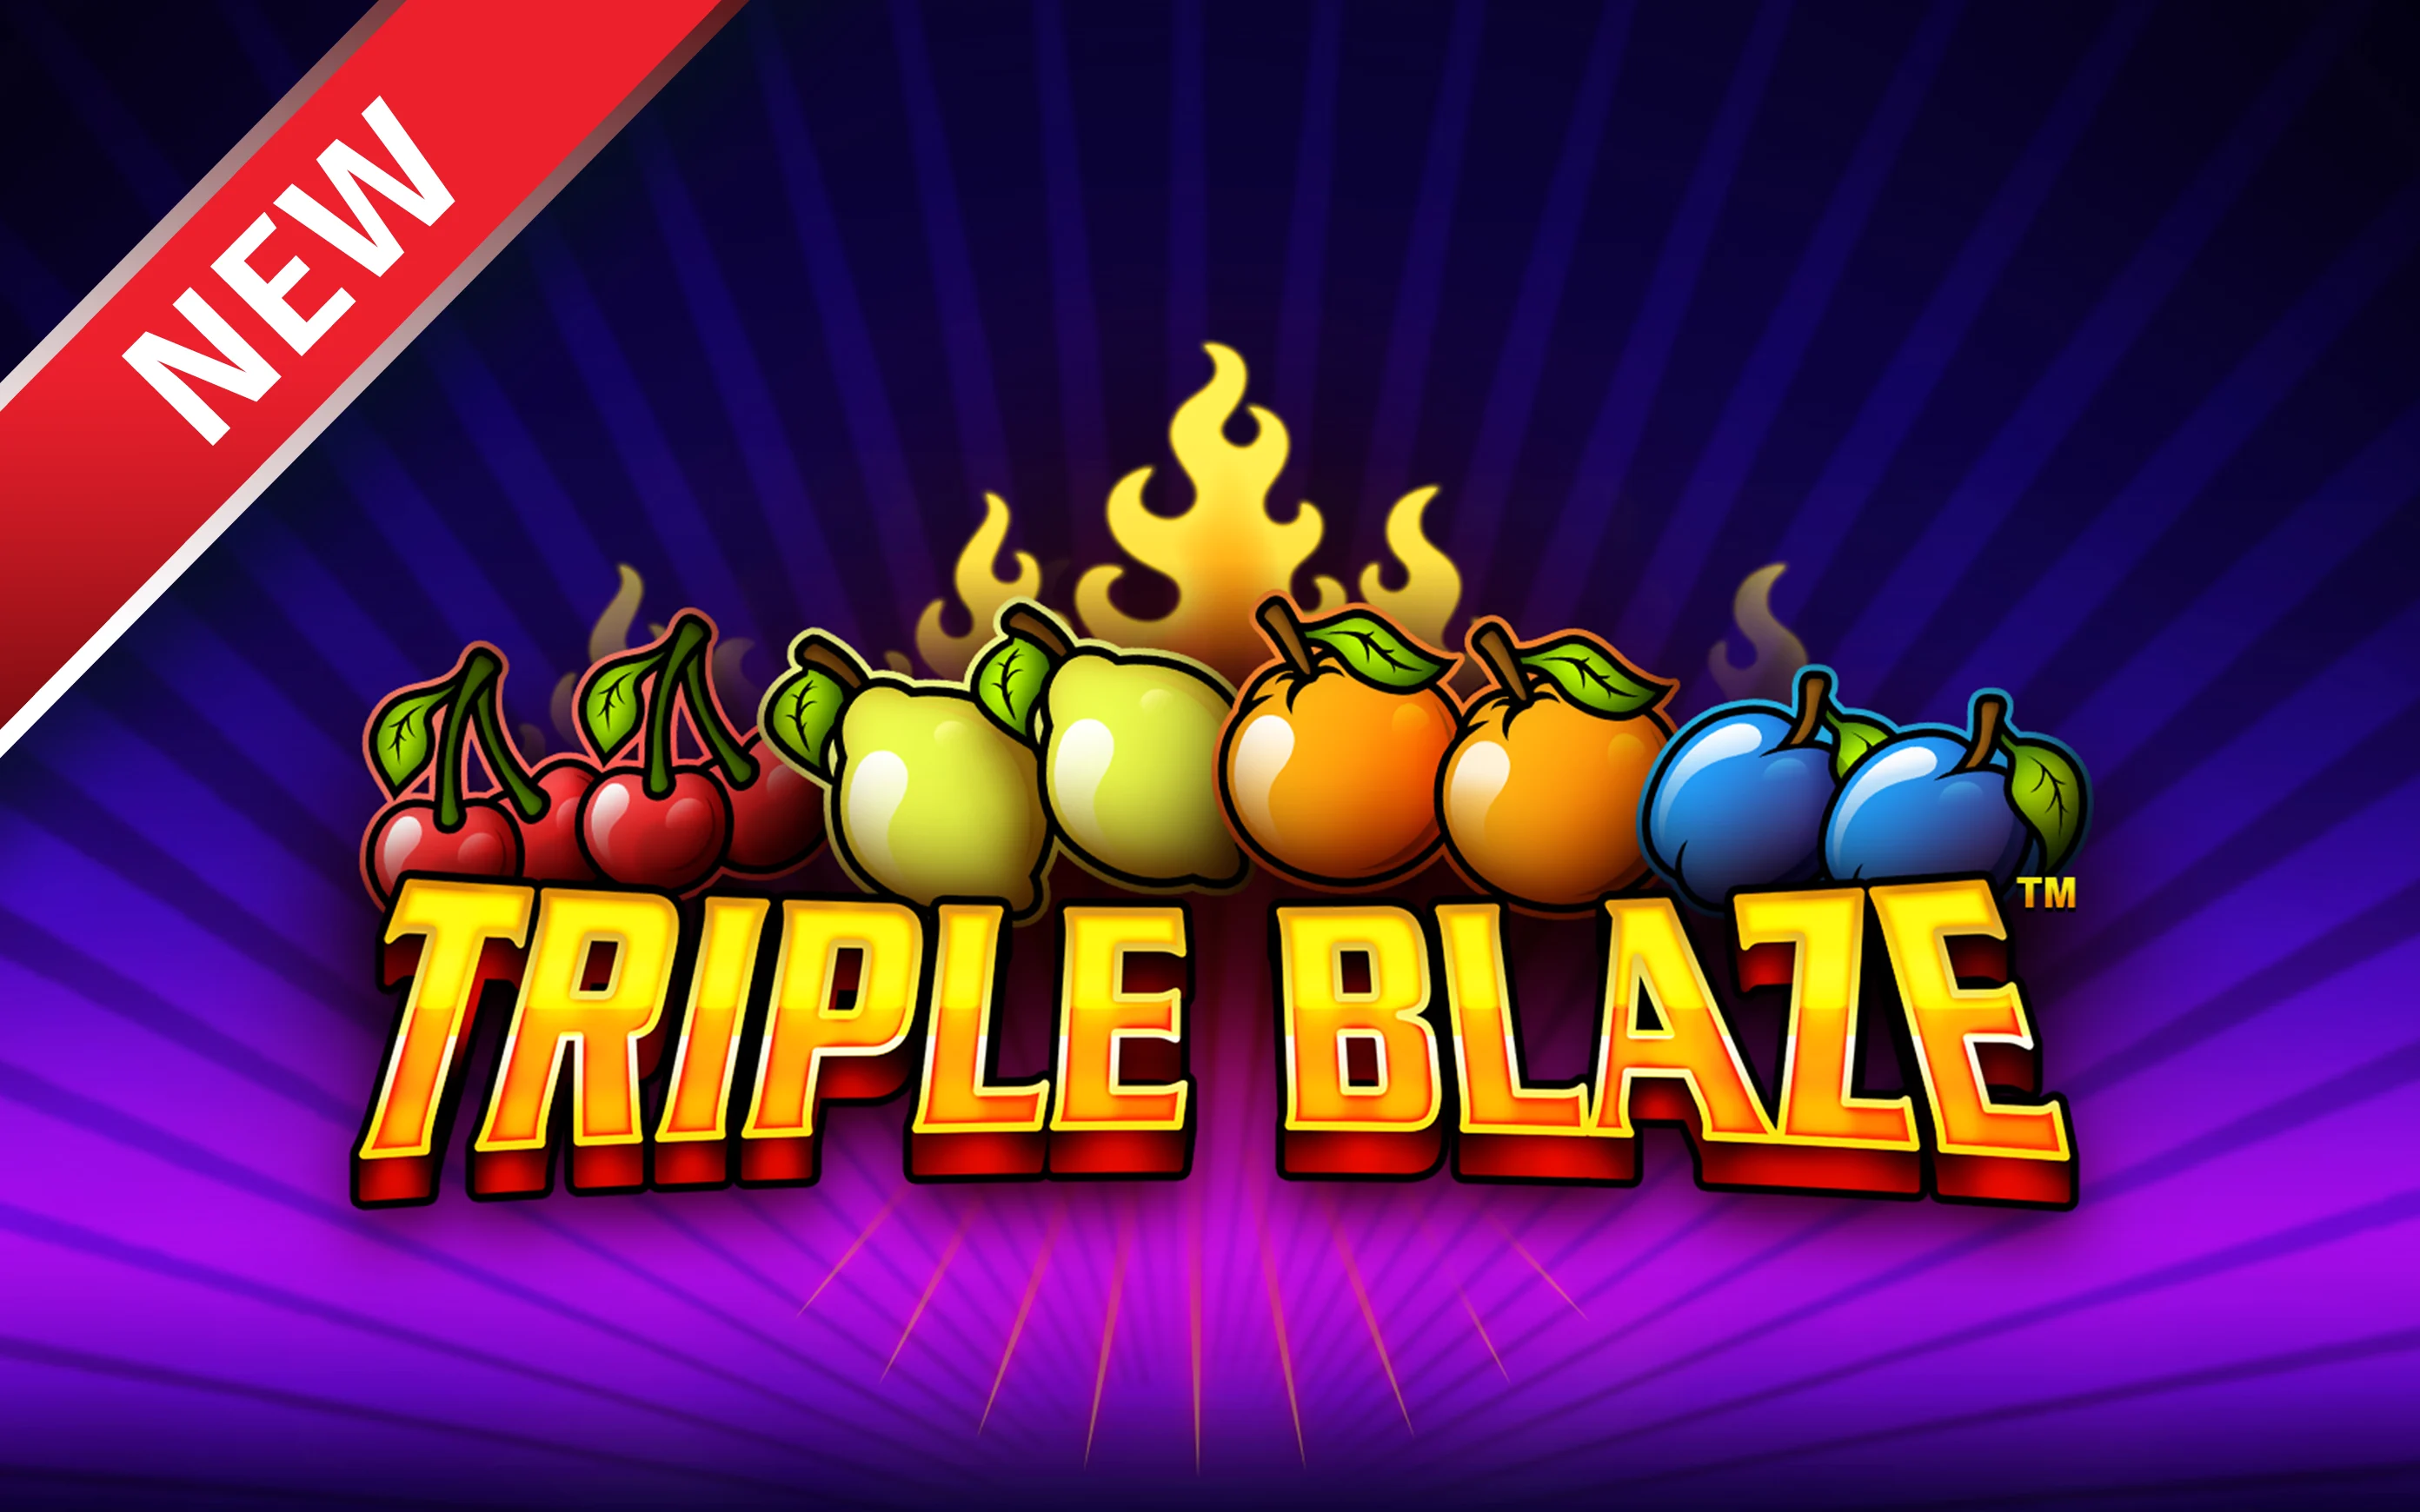 Joacă Triple Blaze în cazinoul online Starcasino.be